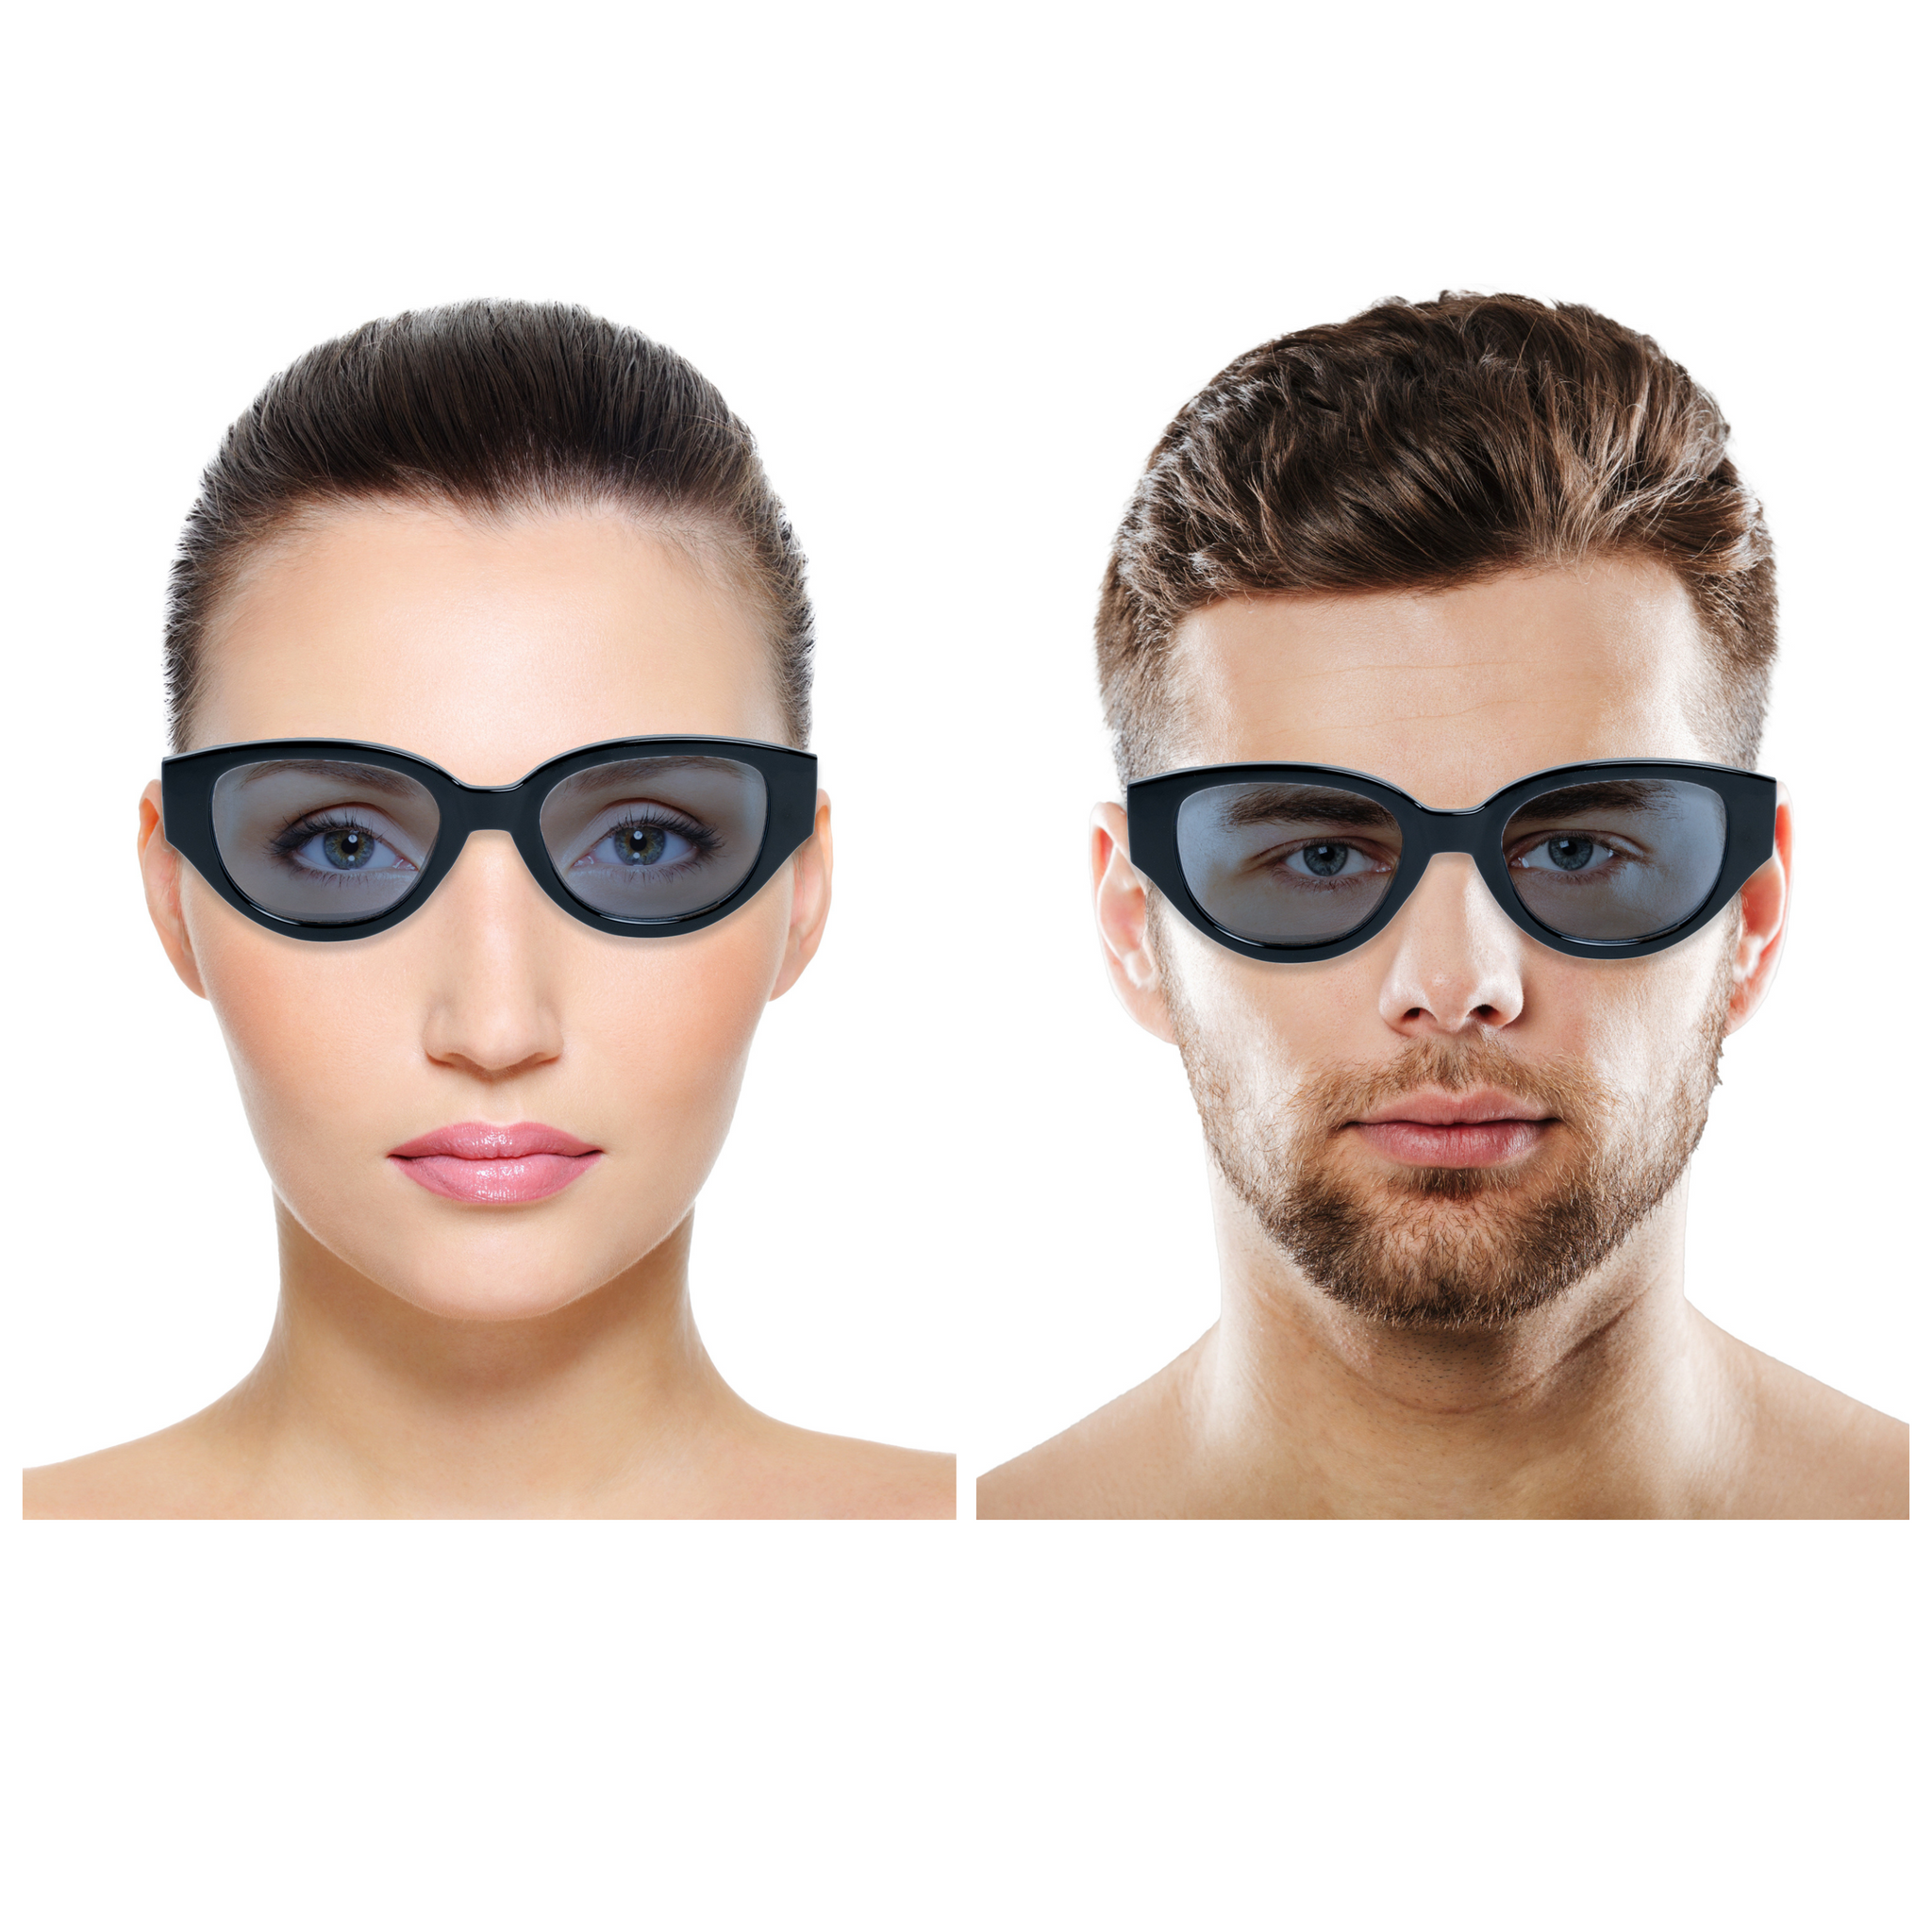 Chokore Polarized Travel Sunglasses with UV 400 Protection (Black)